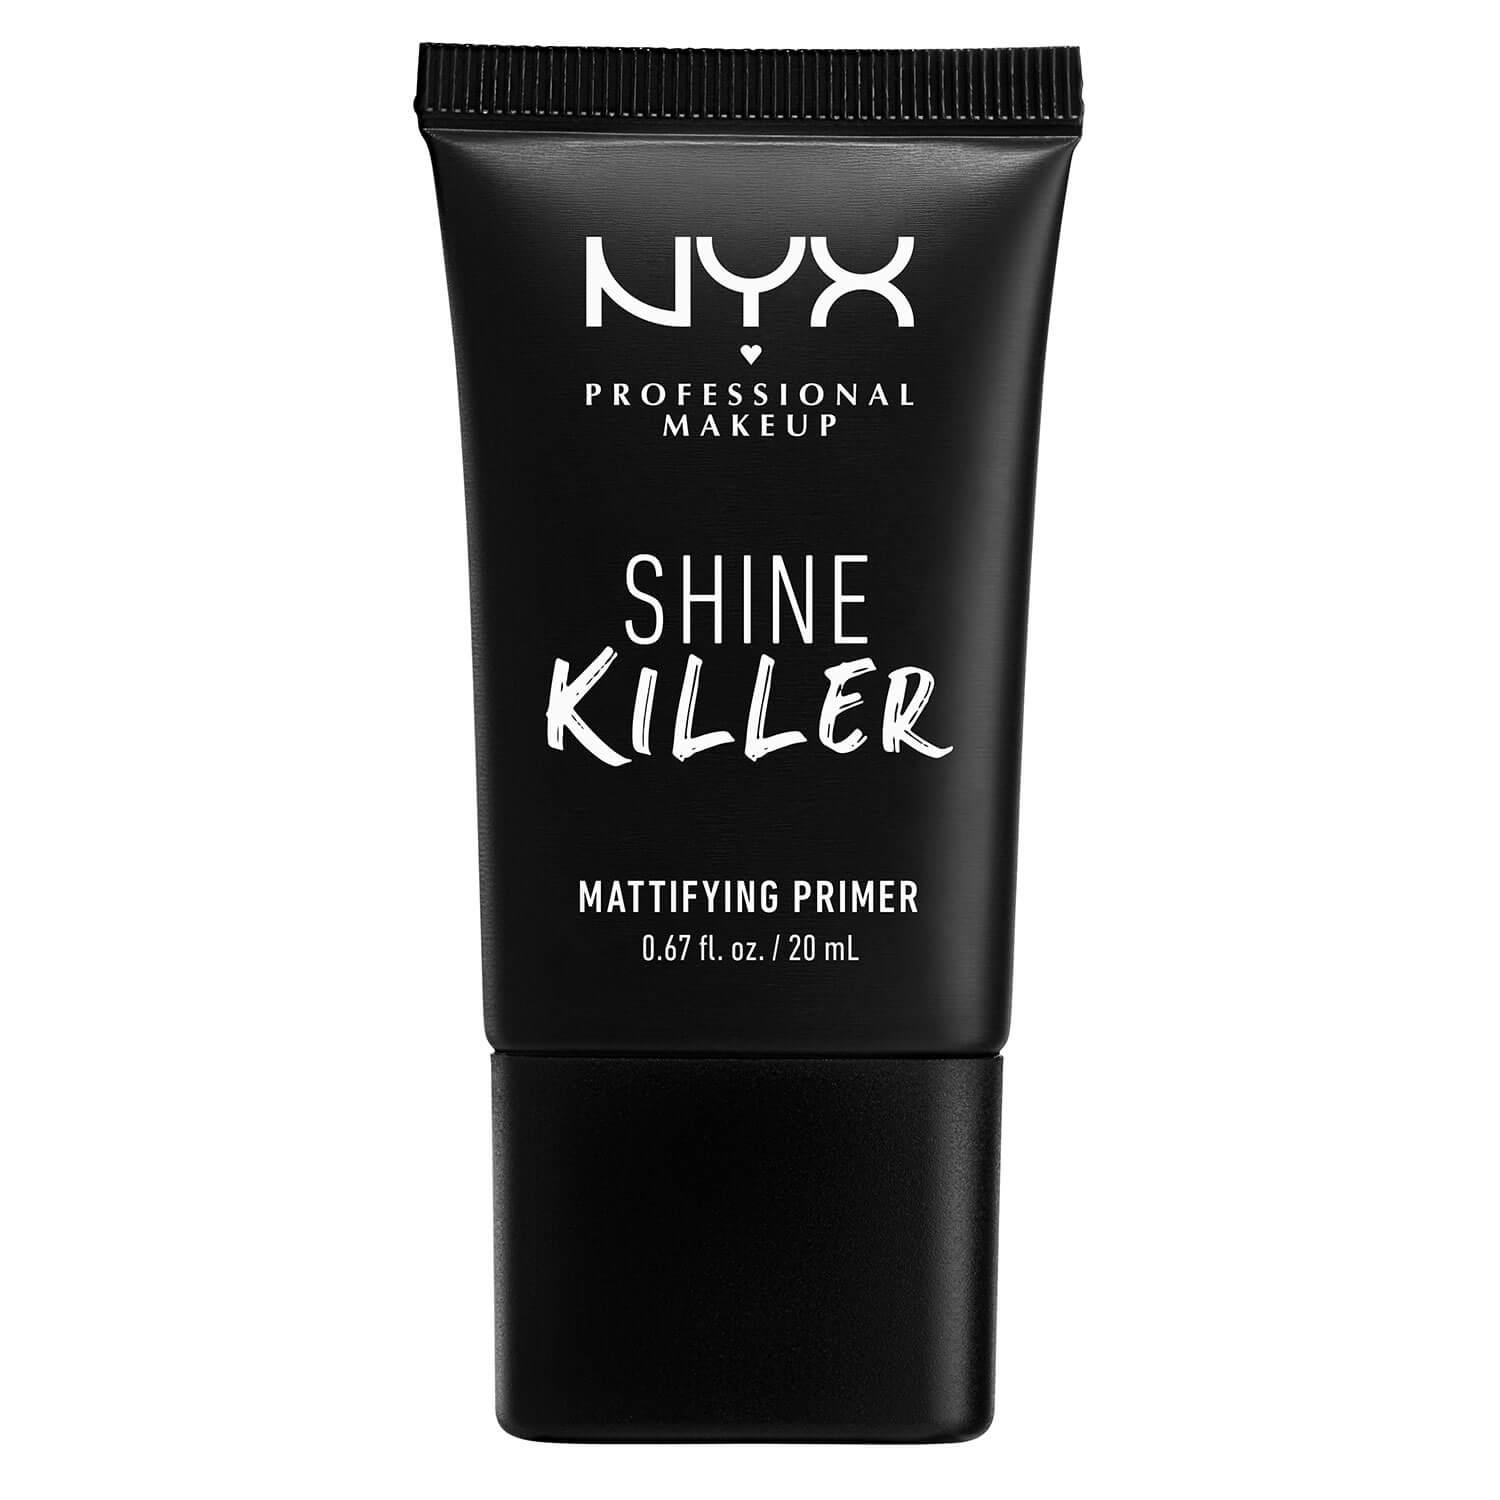 NYX Primer - Shine Killer Mattifying Primer